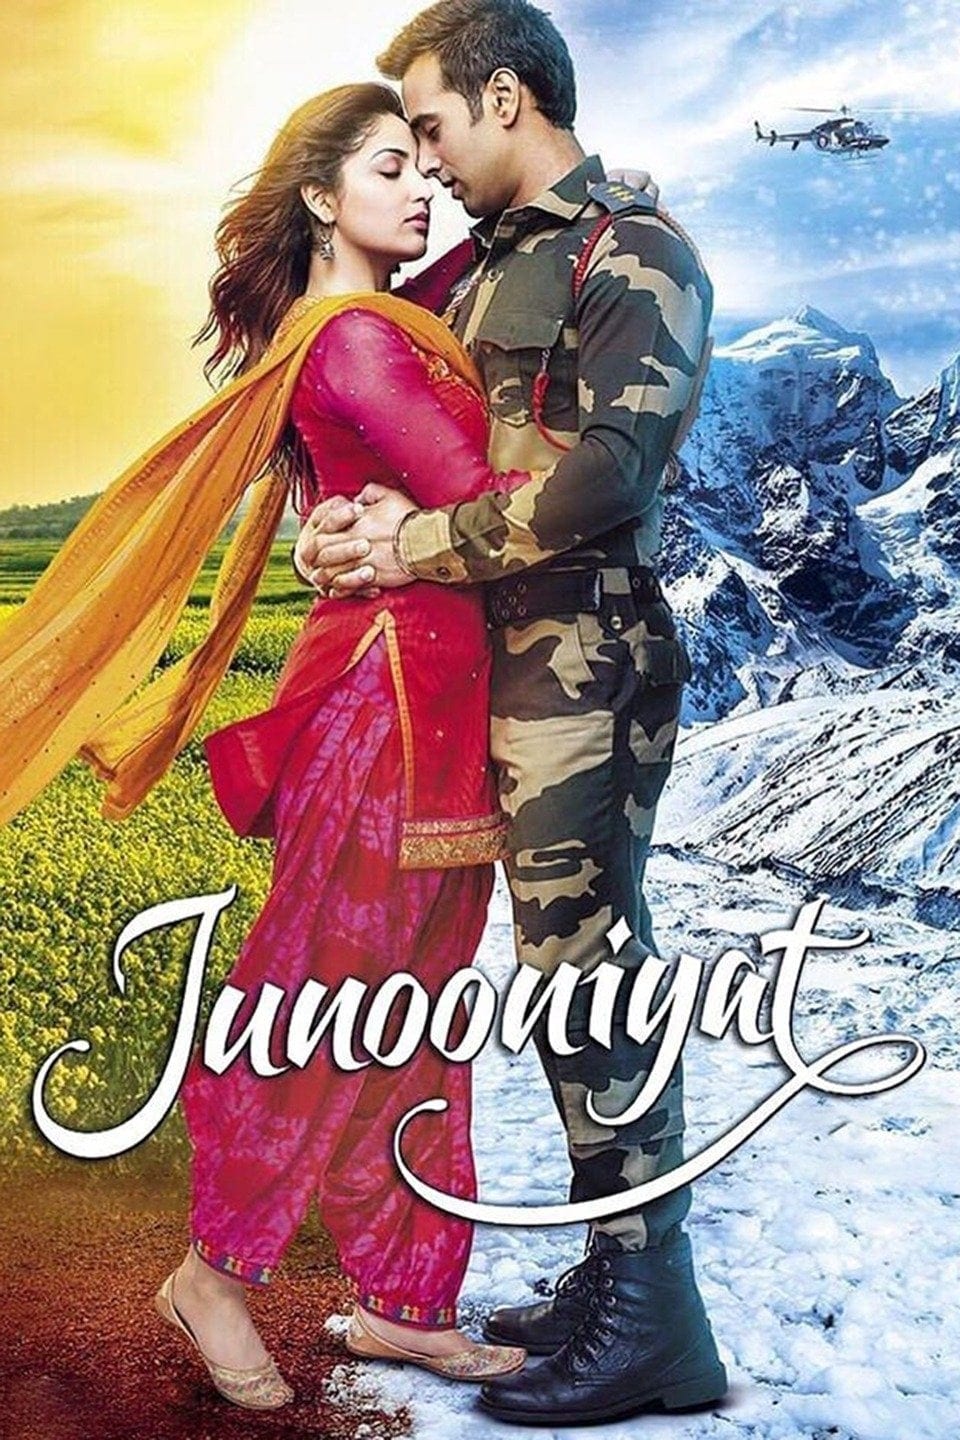 Poster for the movie "Junooniyat"